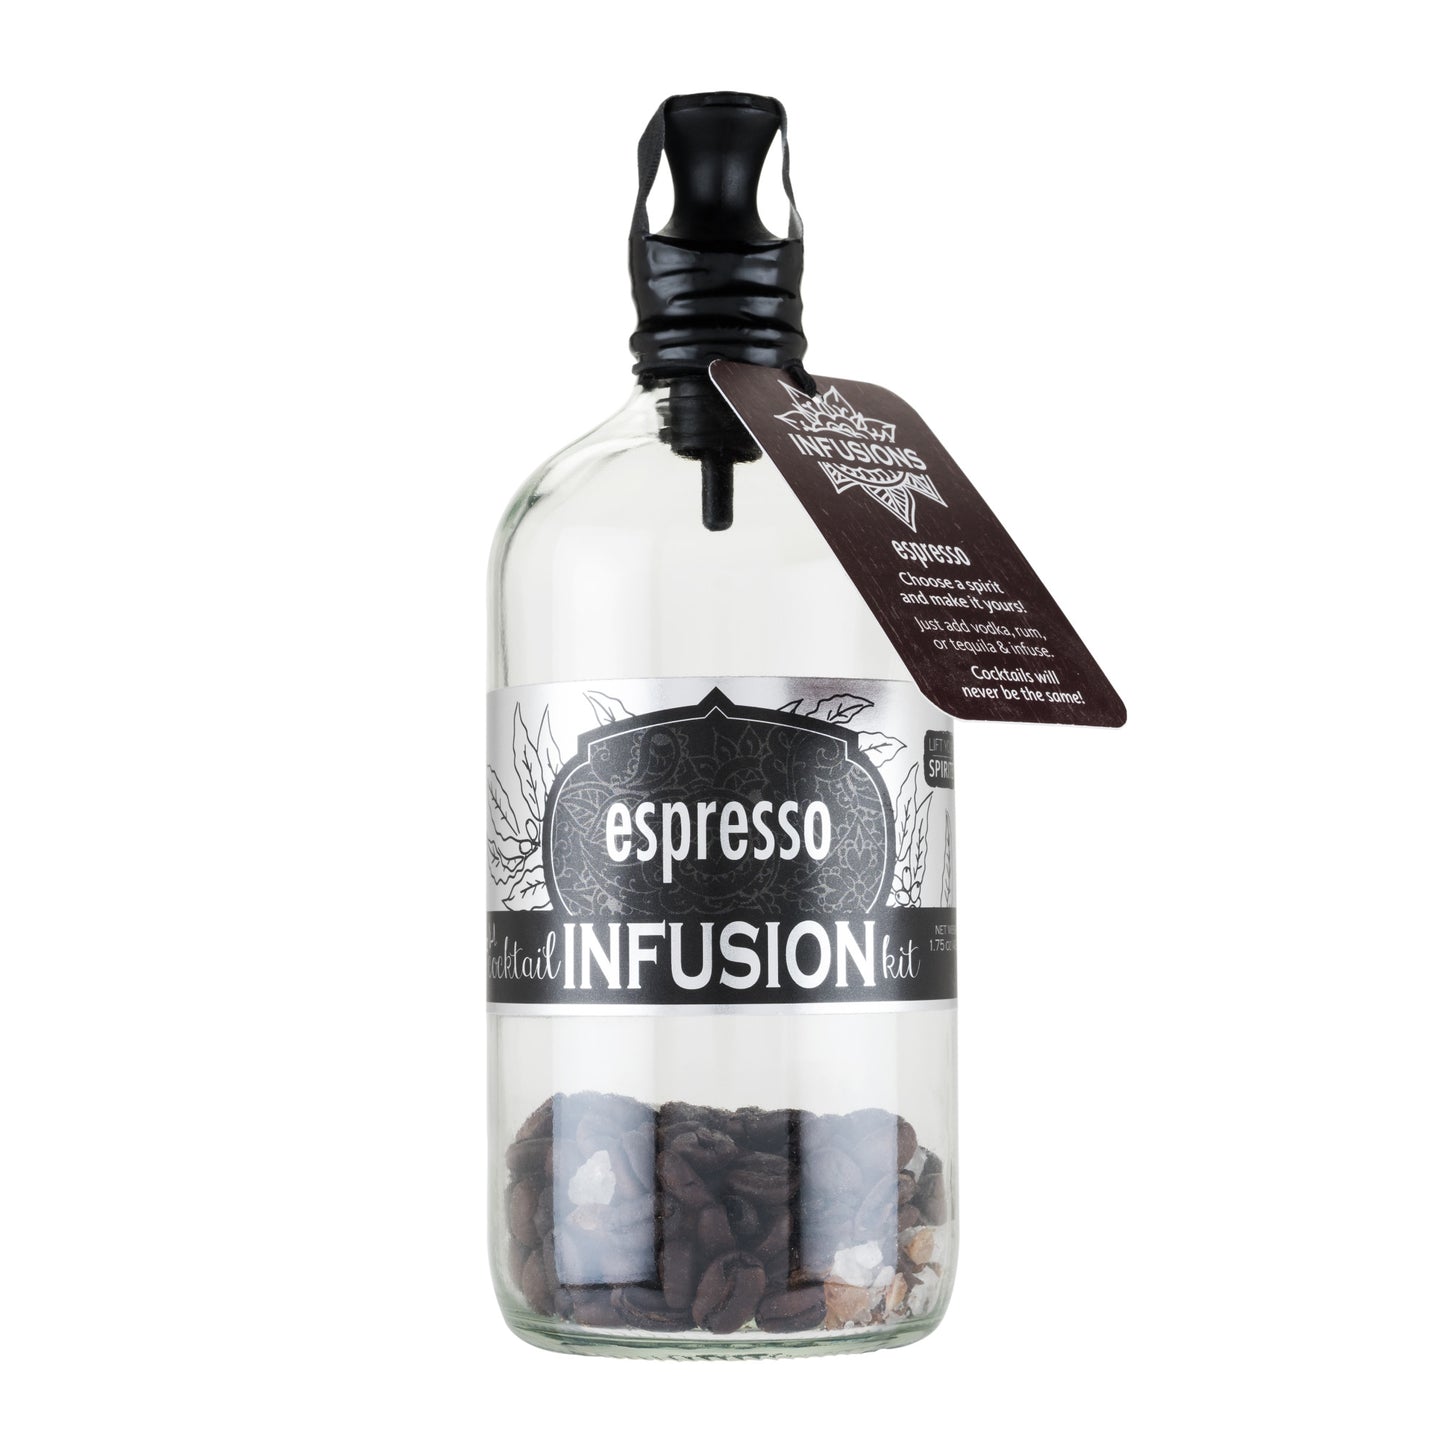 Espresso Cocktail Infusion Bottle